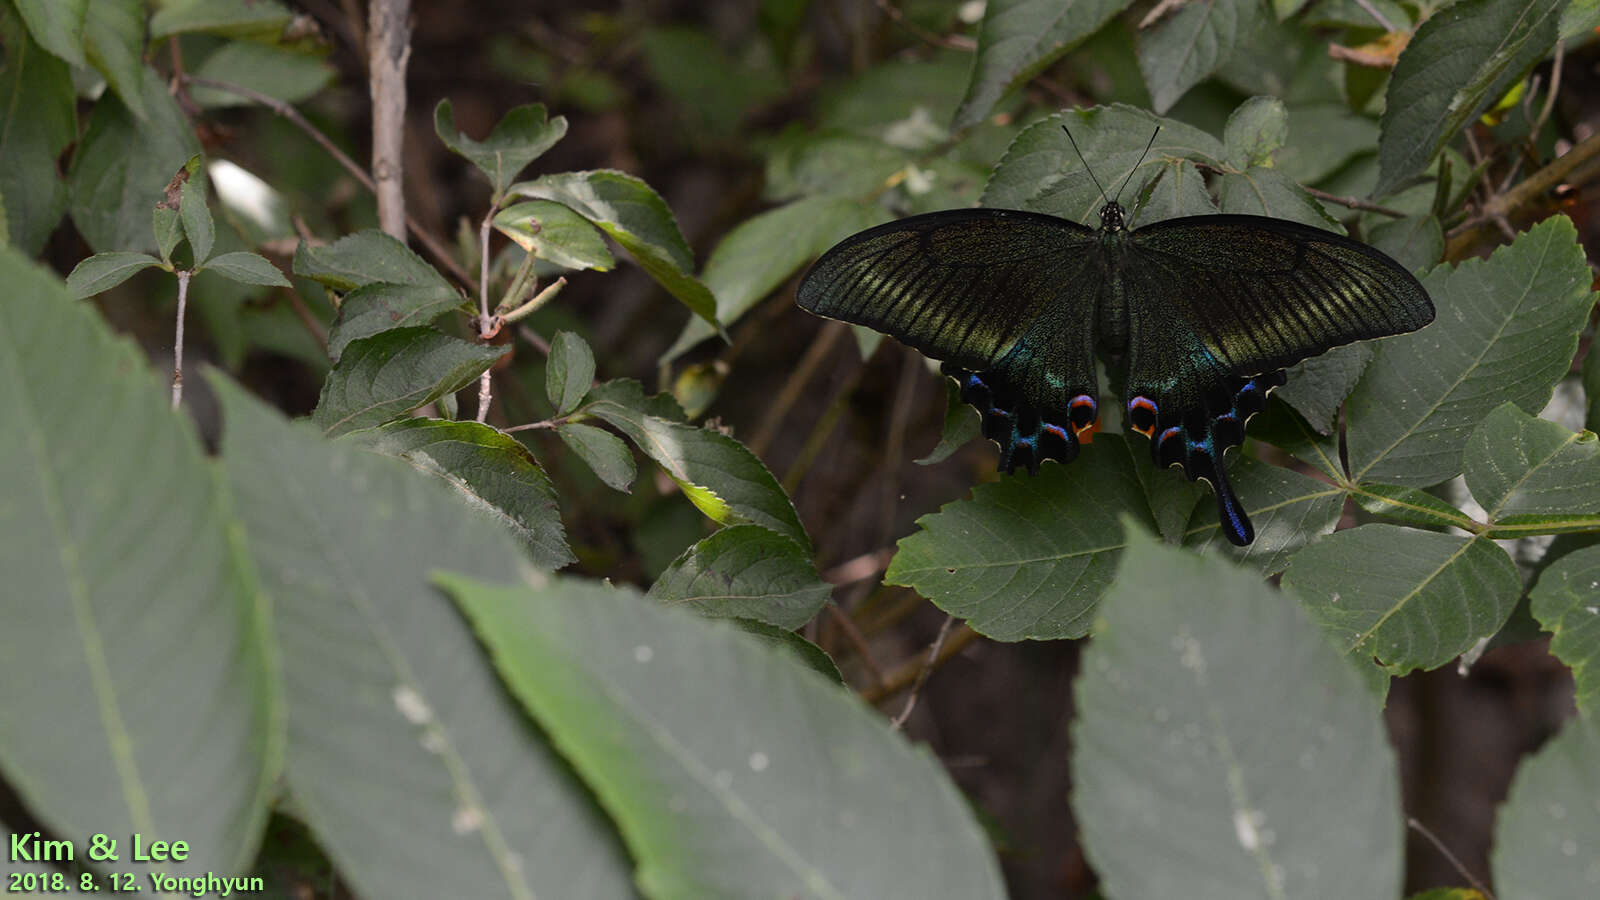 Image of Alpine Black Swallowtail